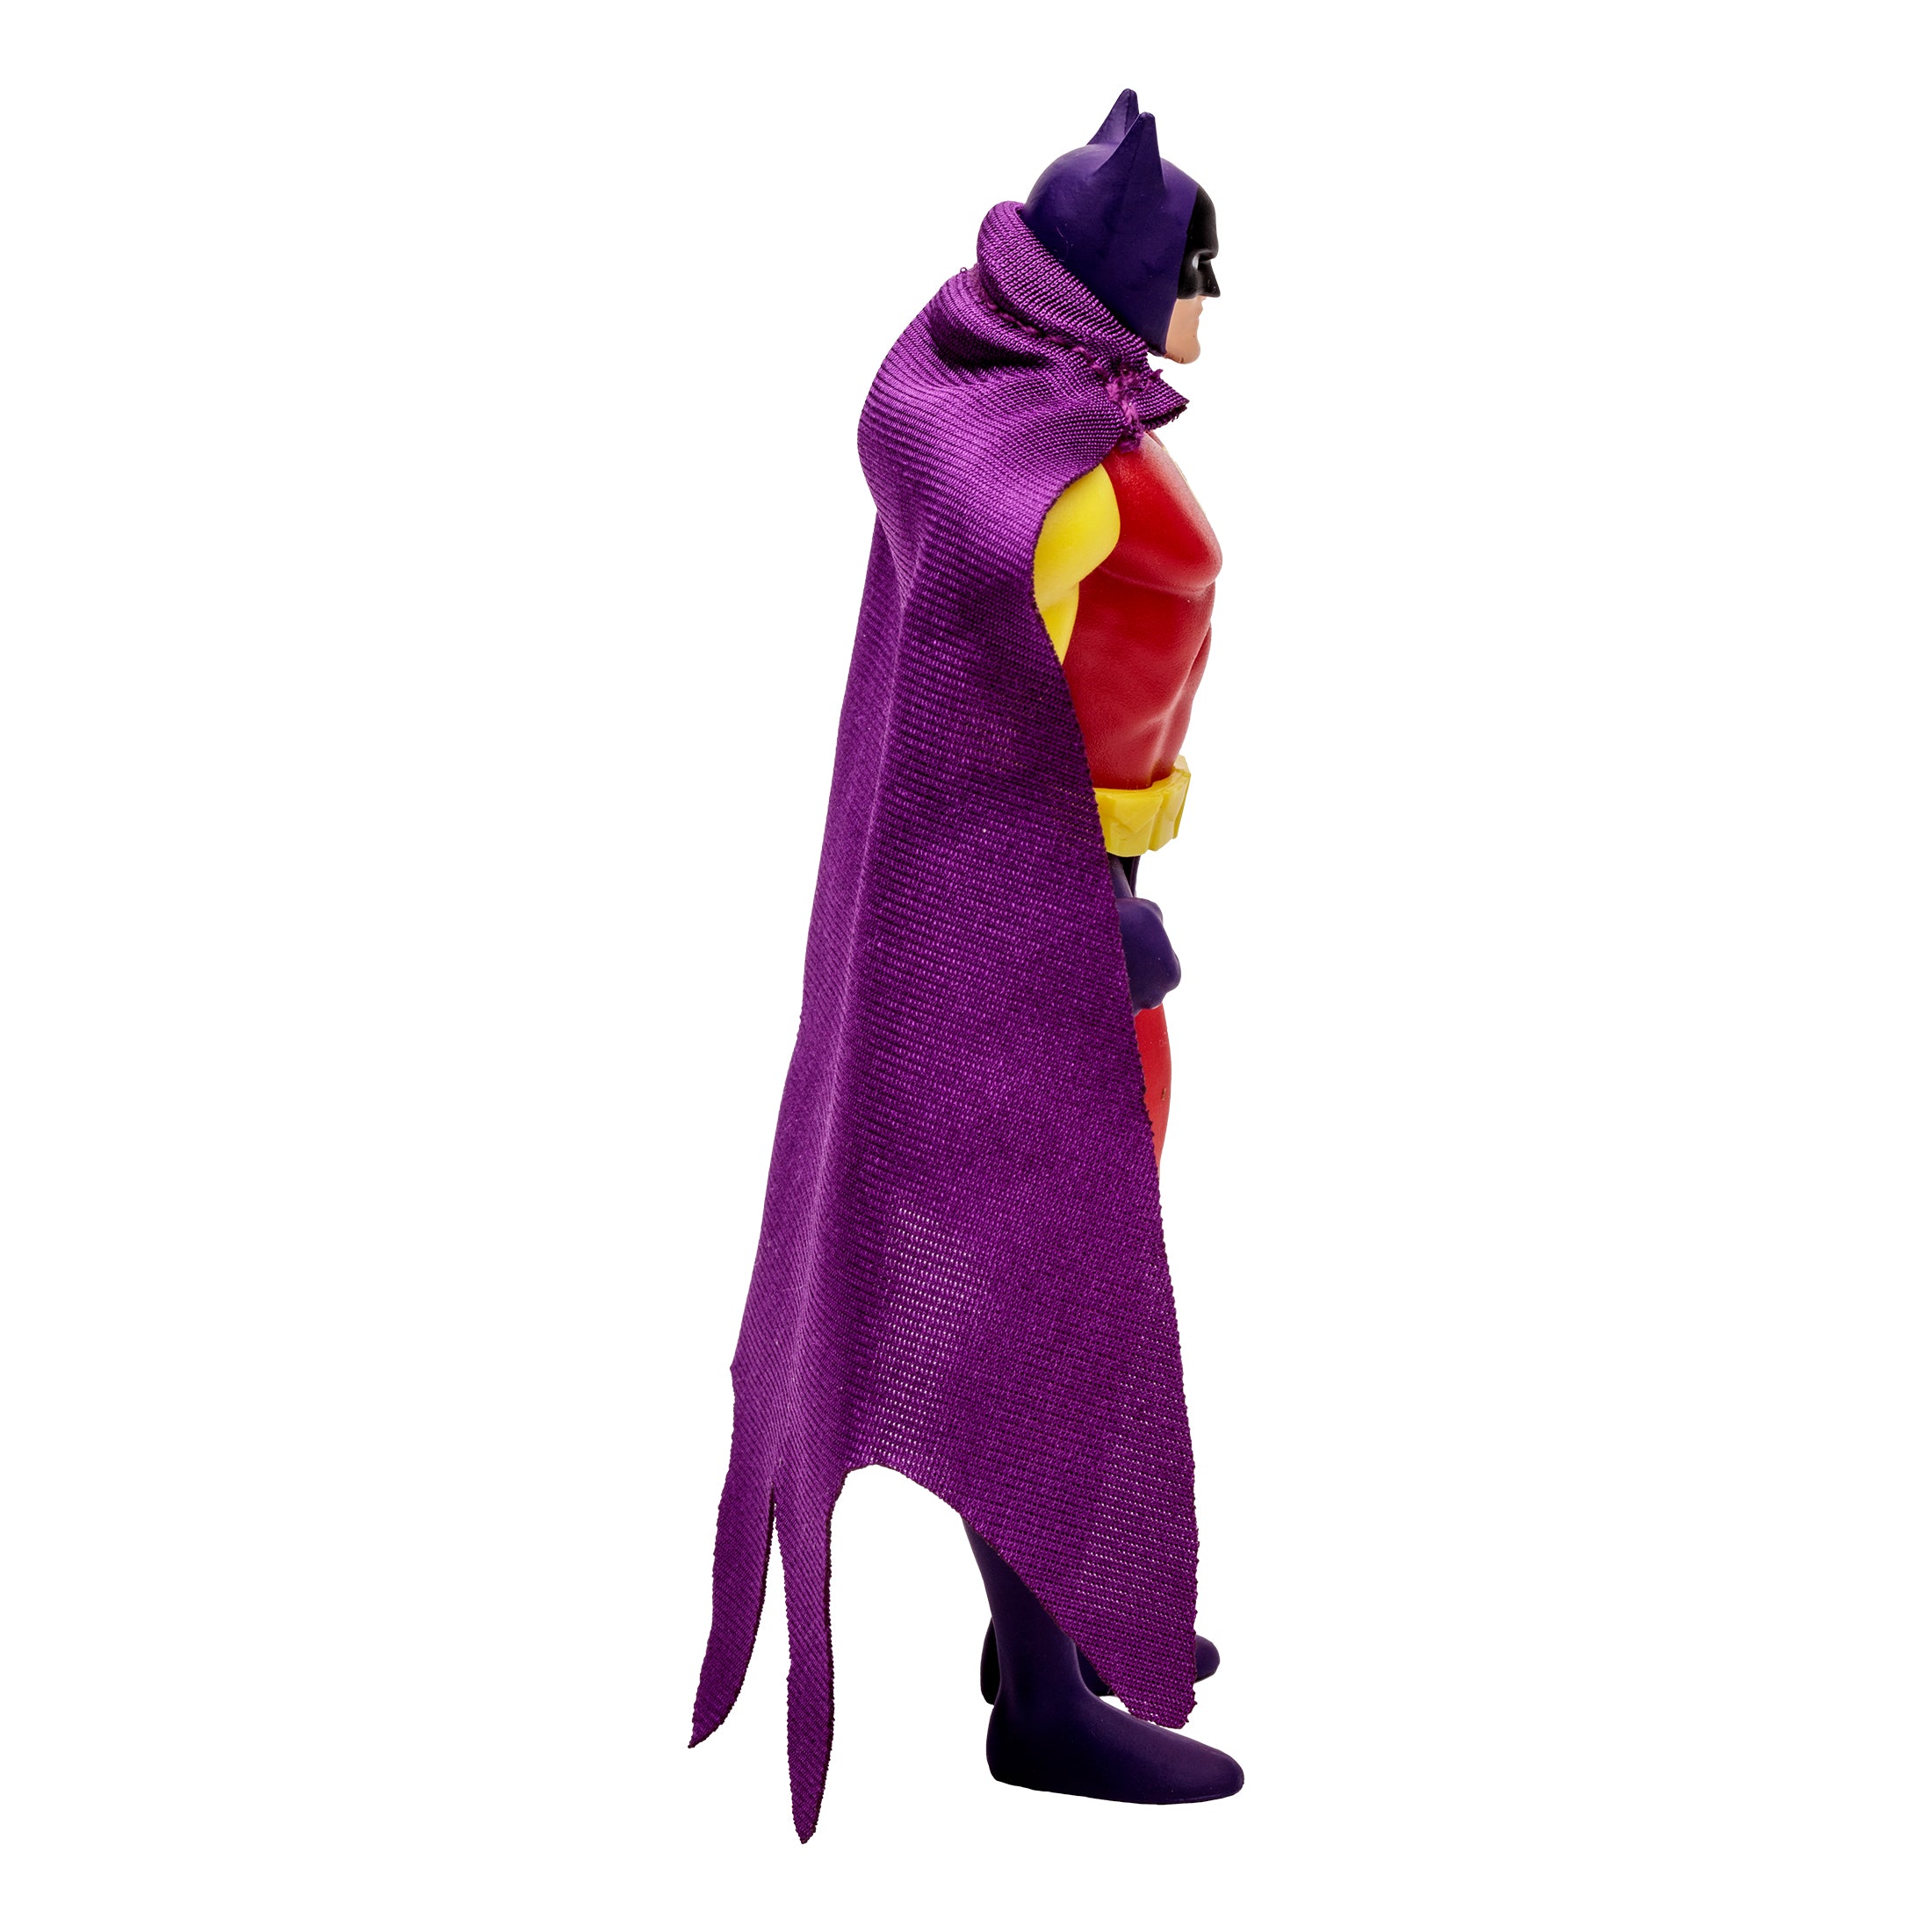 DC Direct Super Powers Figura de Accion: DC Comics Batman - Batman de Zur En Arrh 4.5 Pulgadas